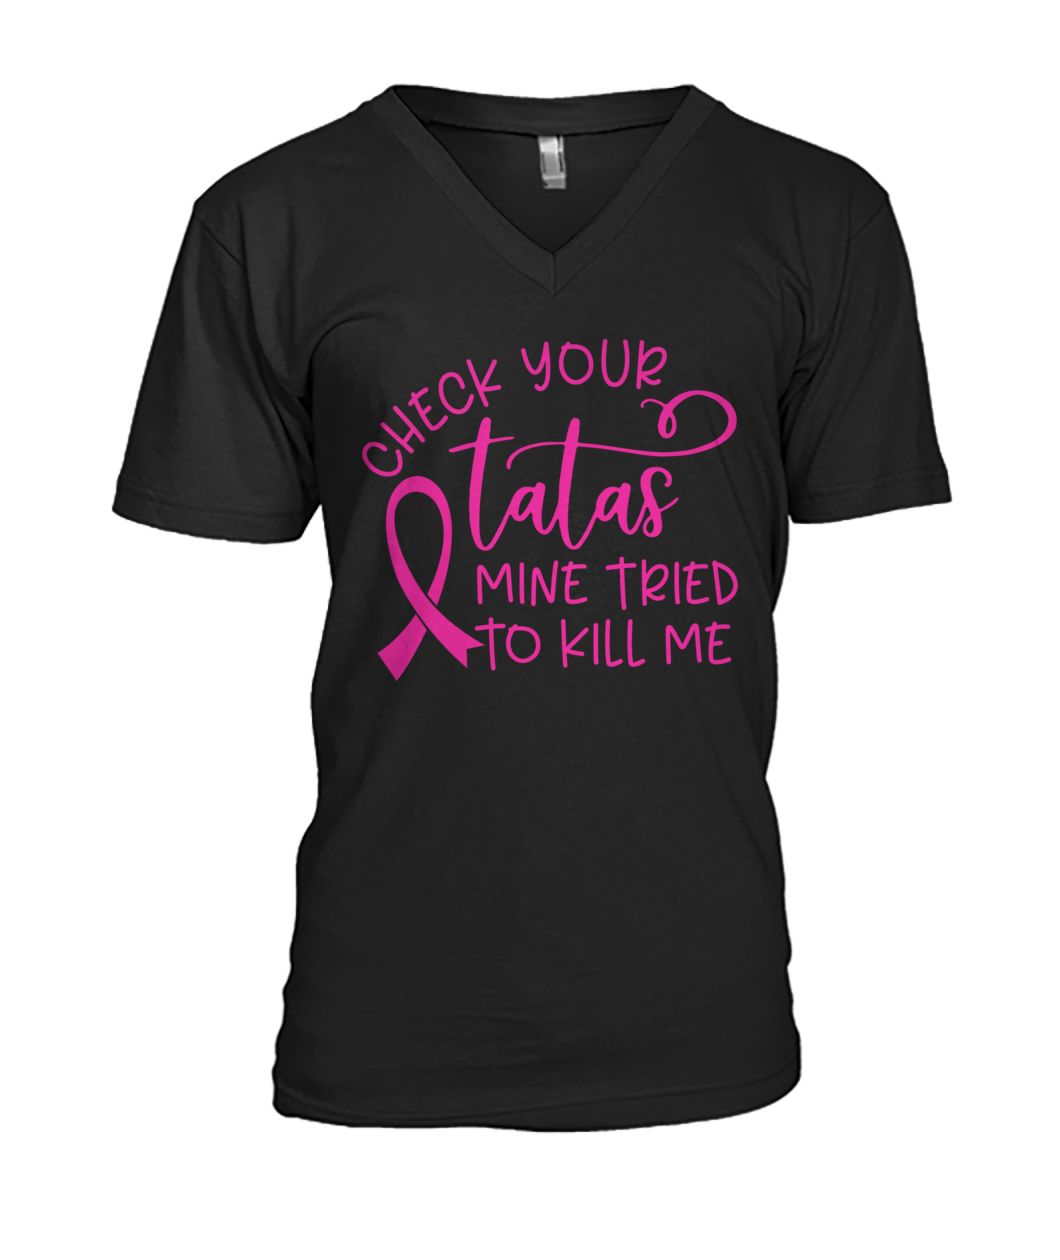 Breast cancer check your tatas mine tried to kill me mens v-neck